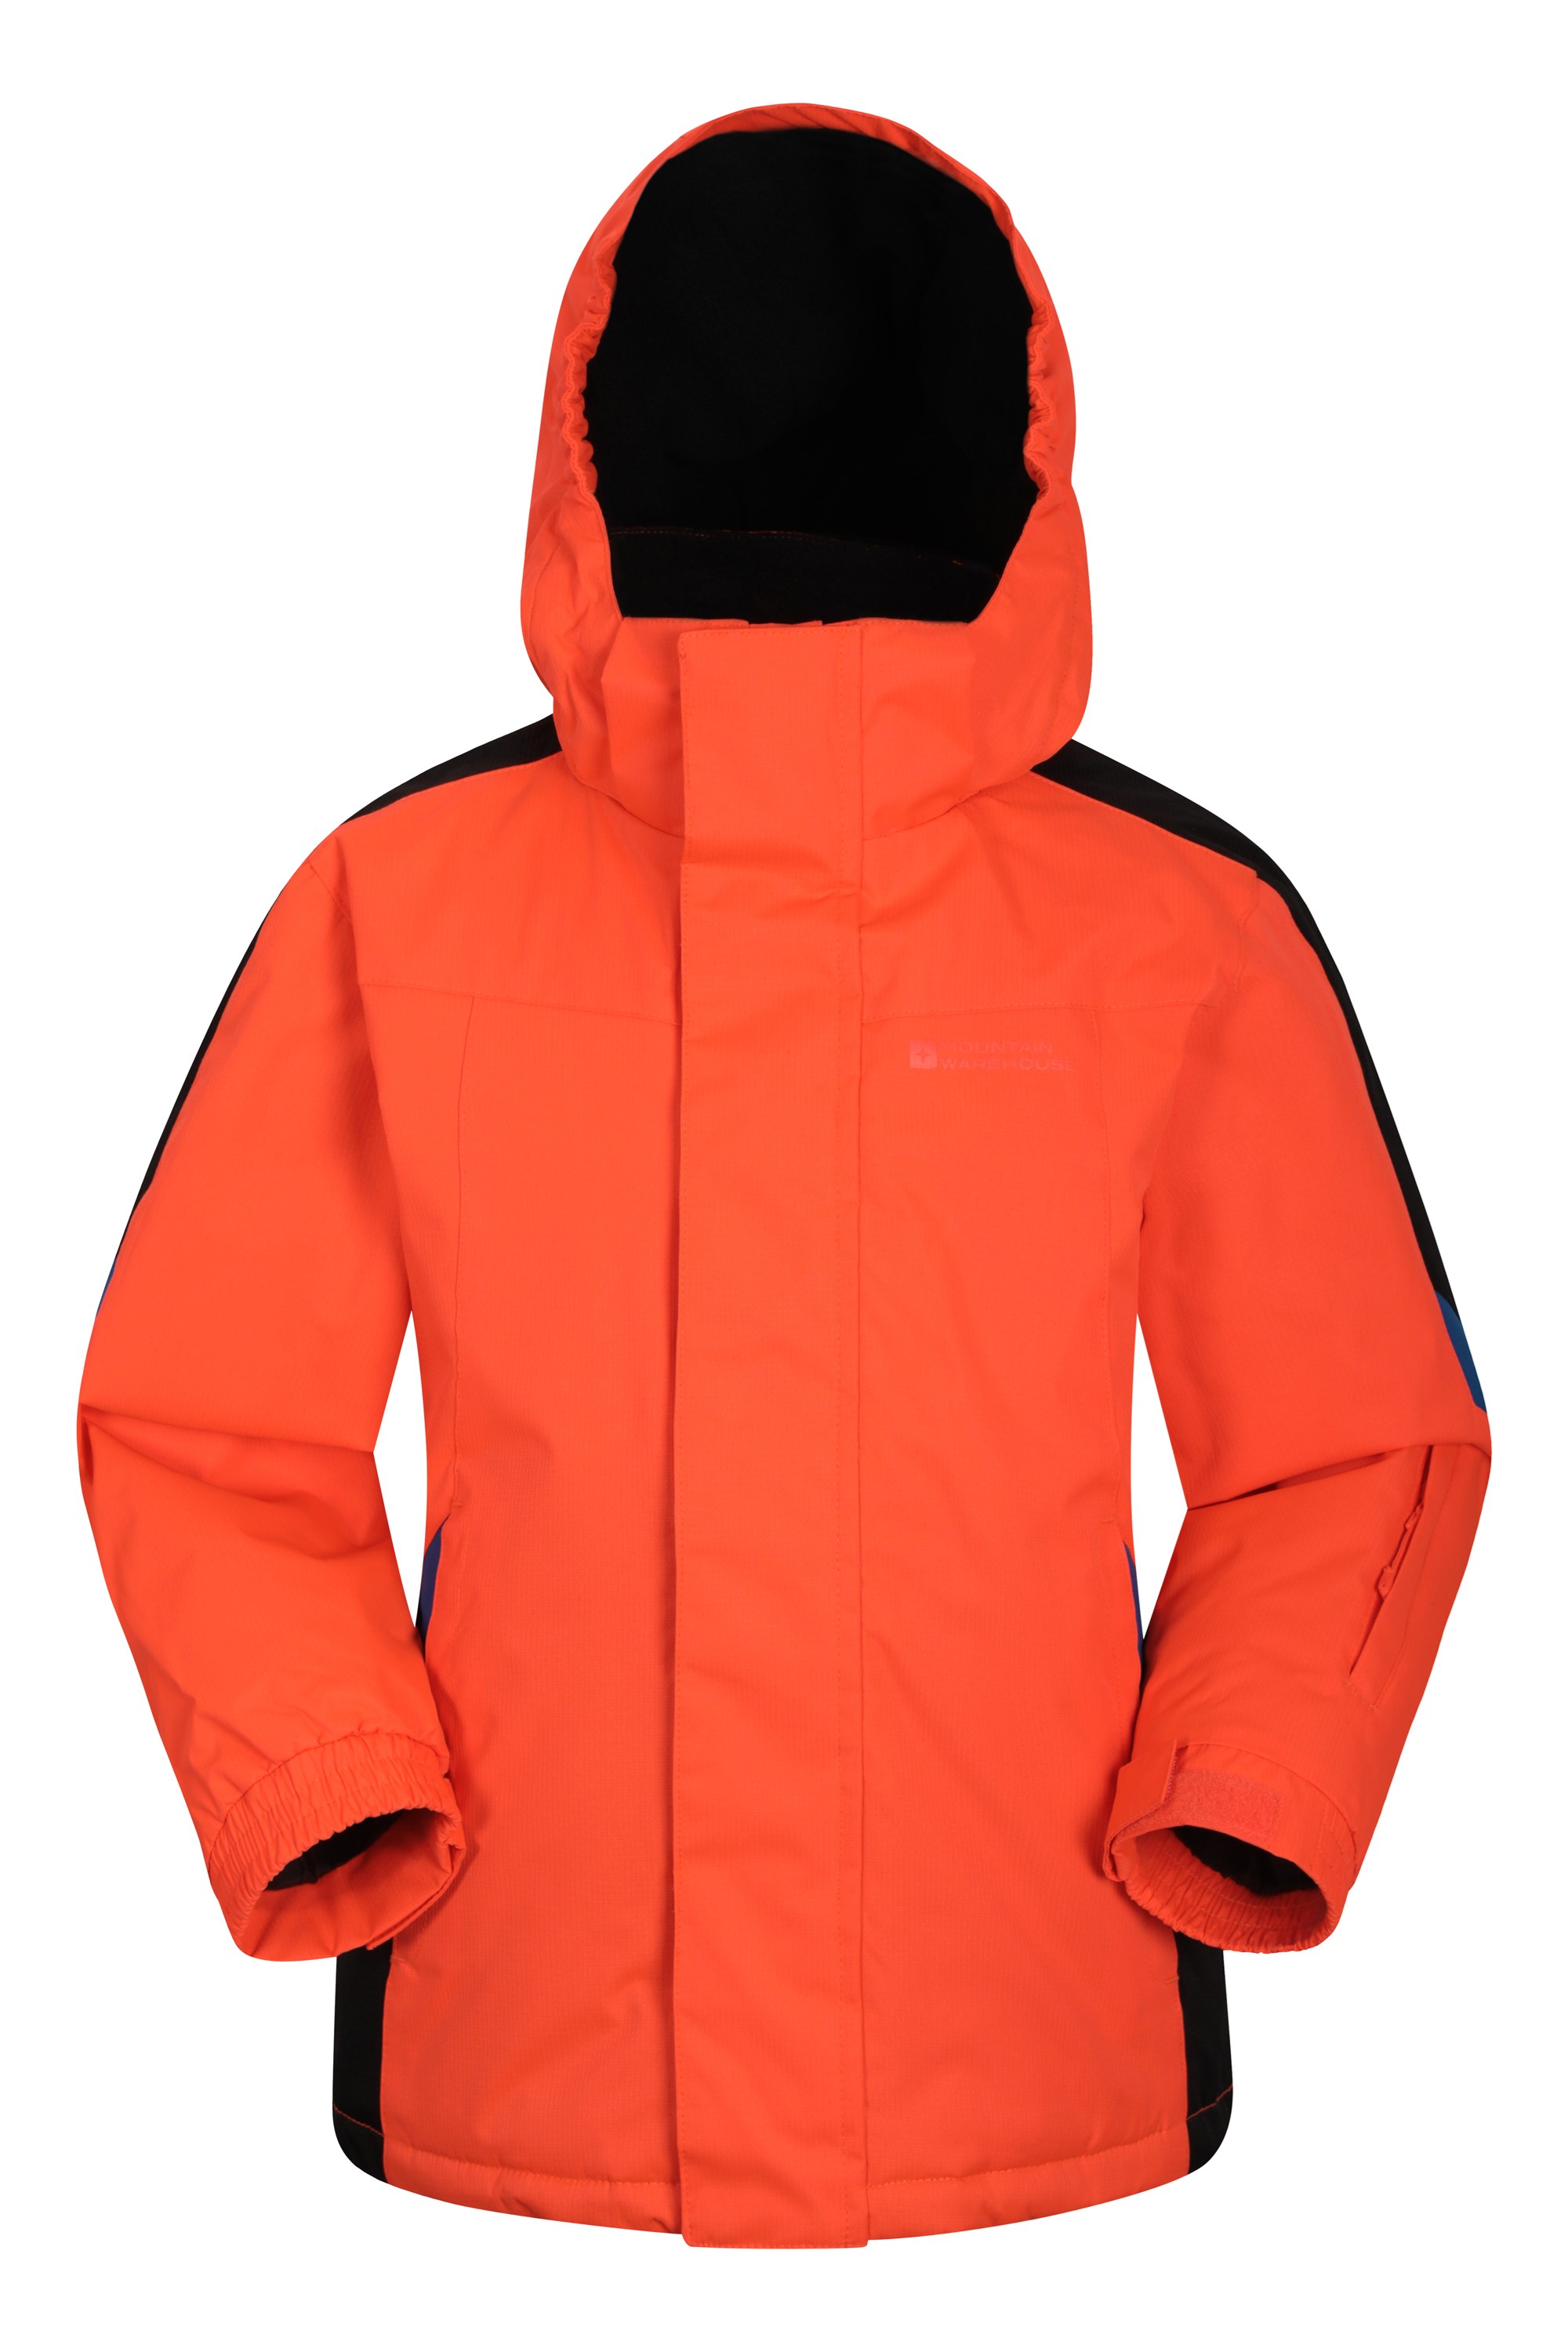 Mountain Warehouse Kids Ski Jacket Snowproof Fleece Lined Girls Boys Winter Coat 